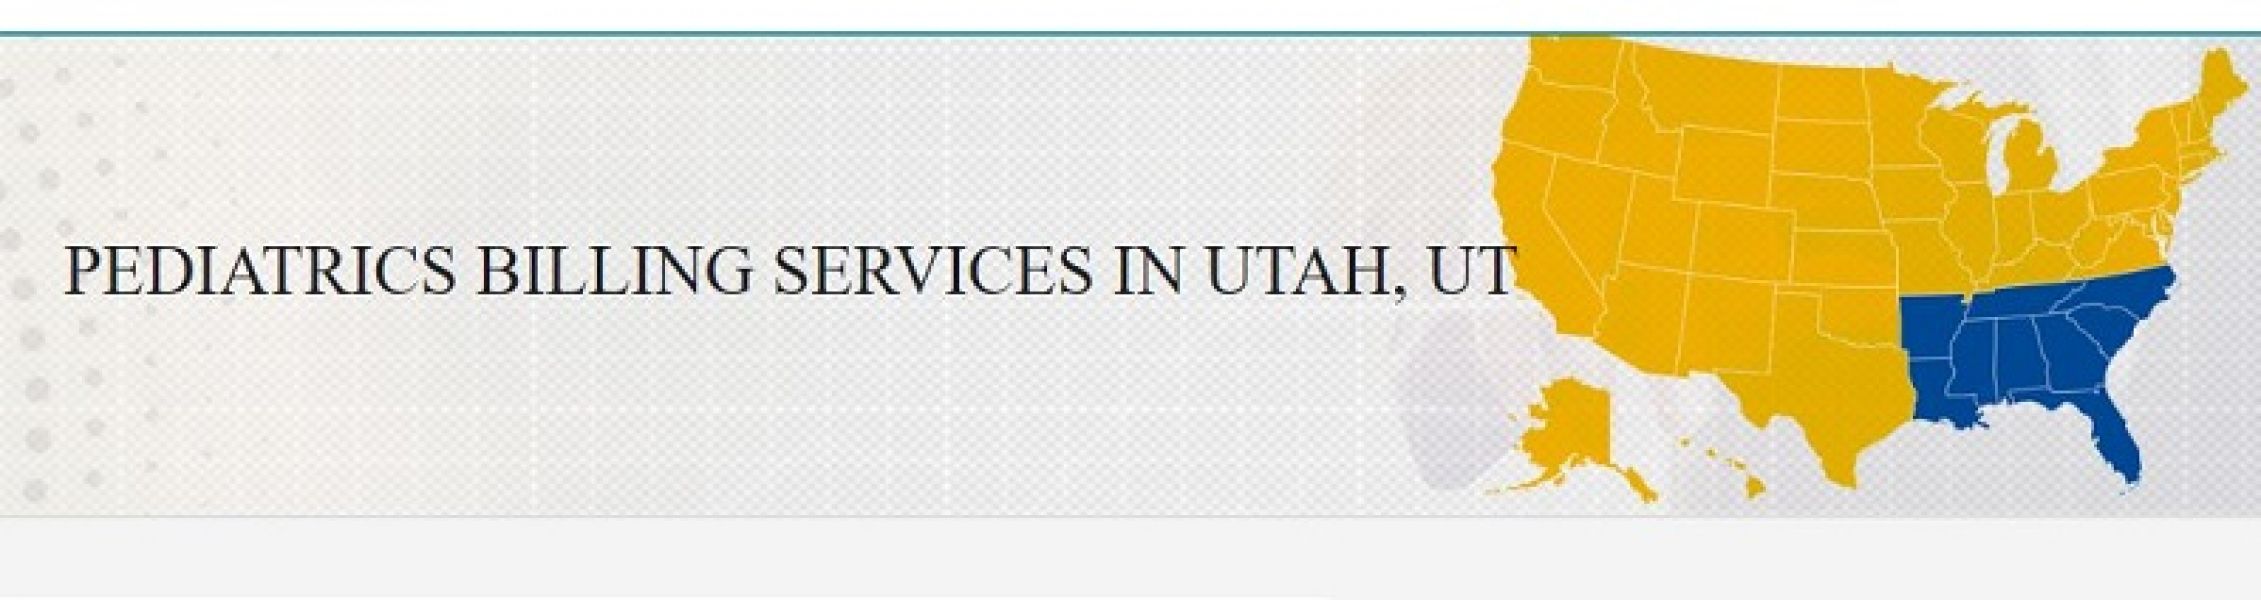 Pediatrics Billing Services for Utah, UT